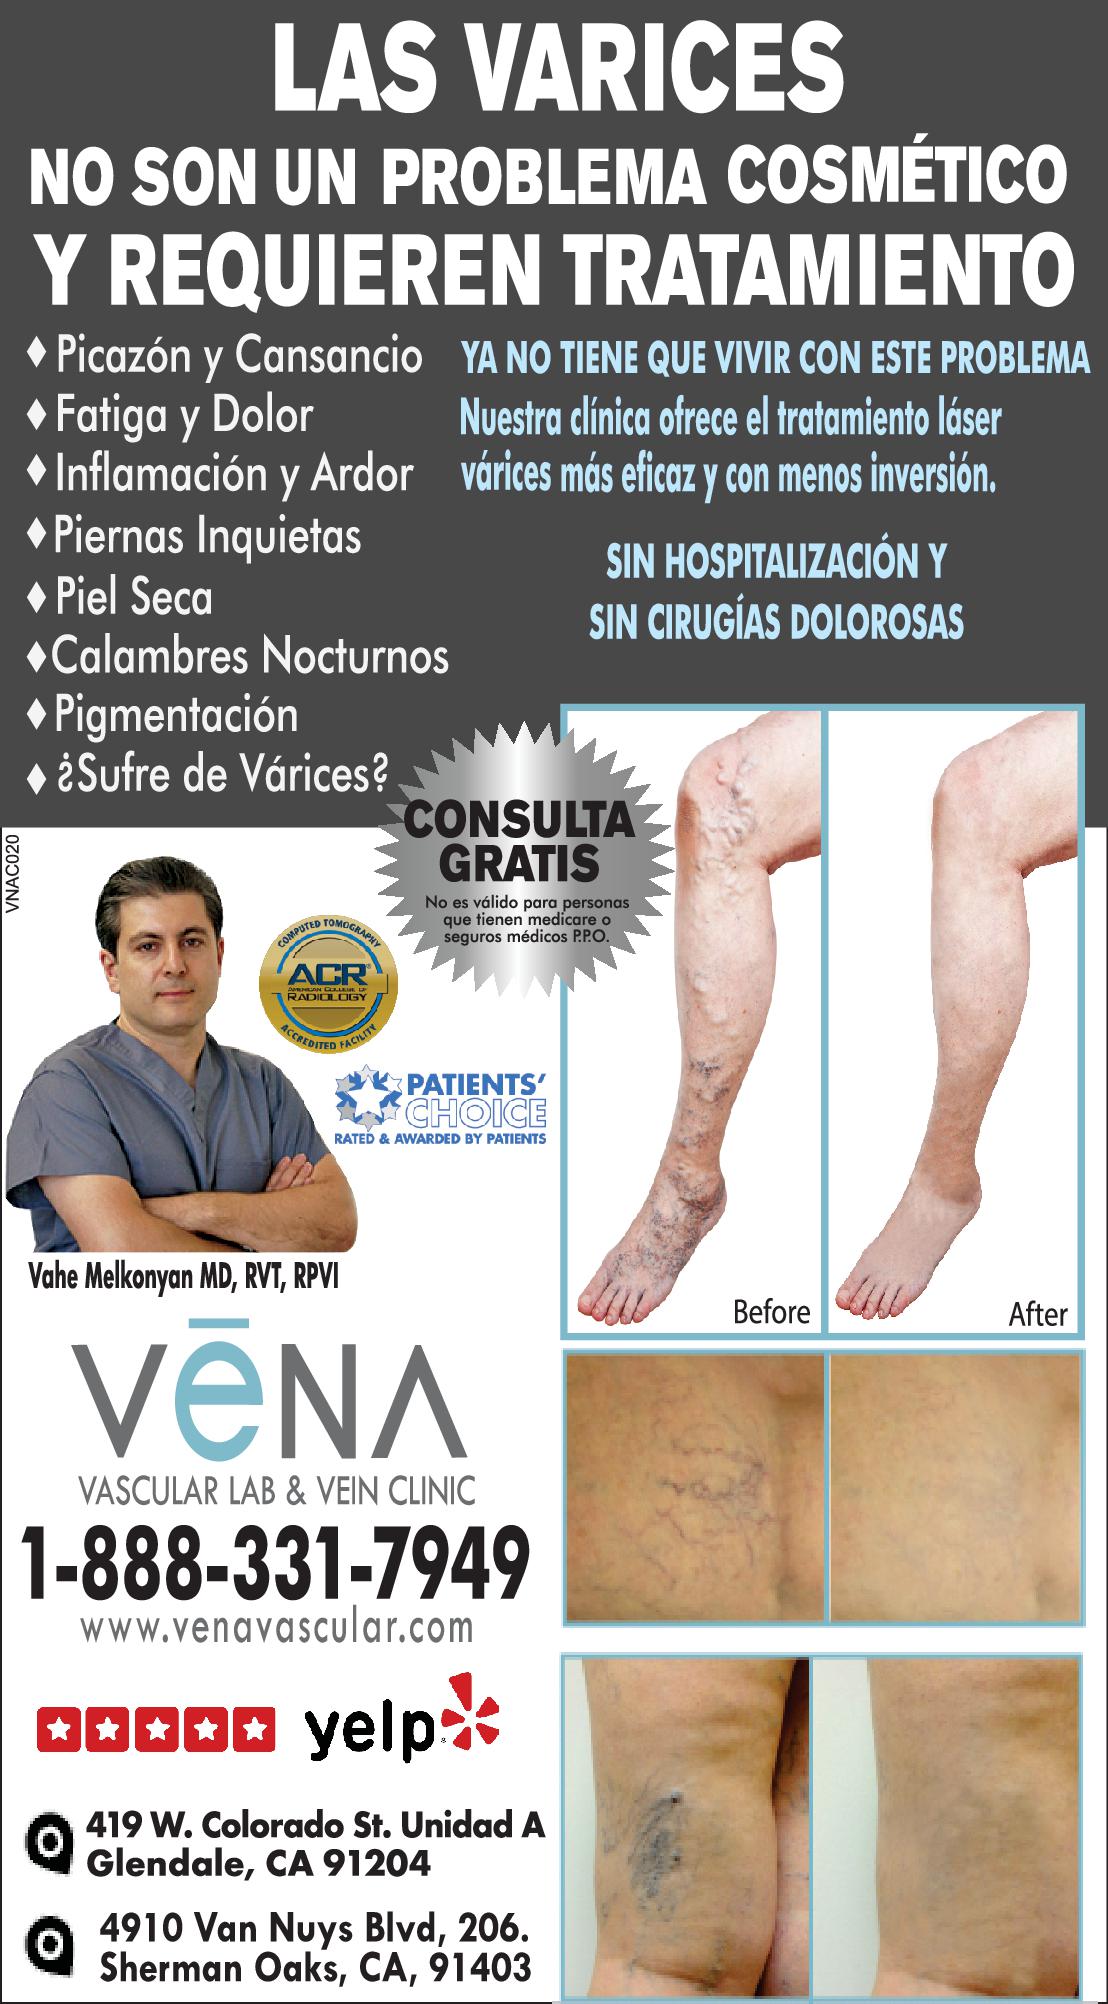 Vena Vascular Lab & Vein Clinic